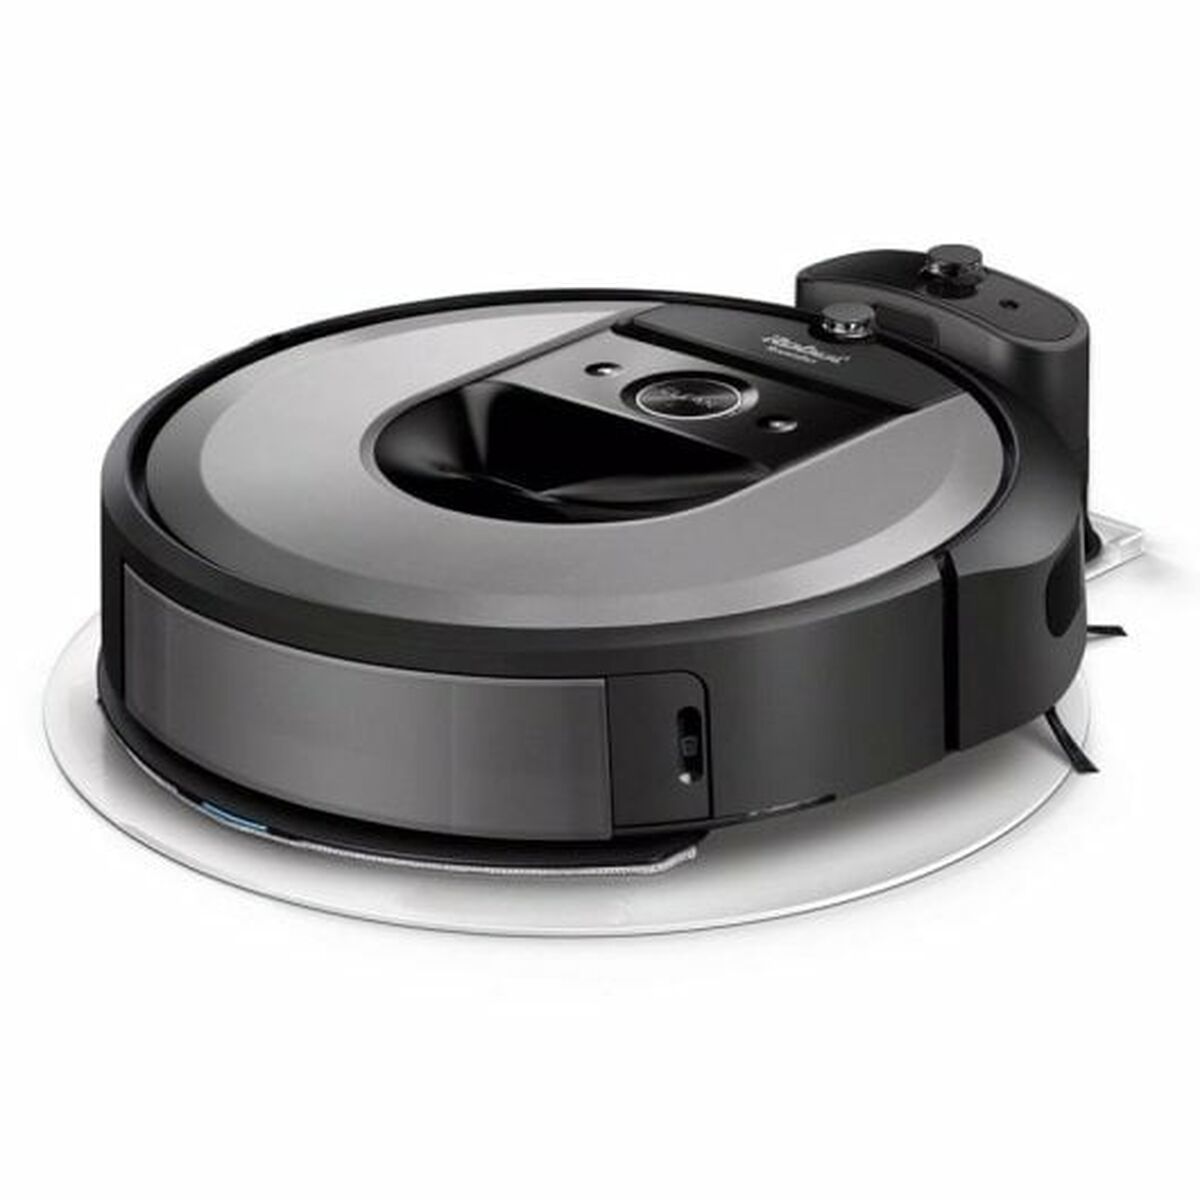 Робот-пылесос iRobot Roomba Combo i8